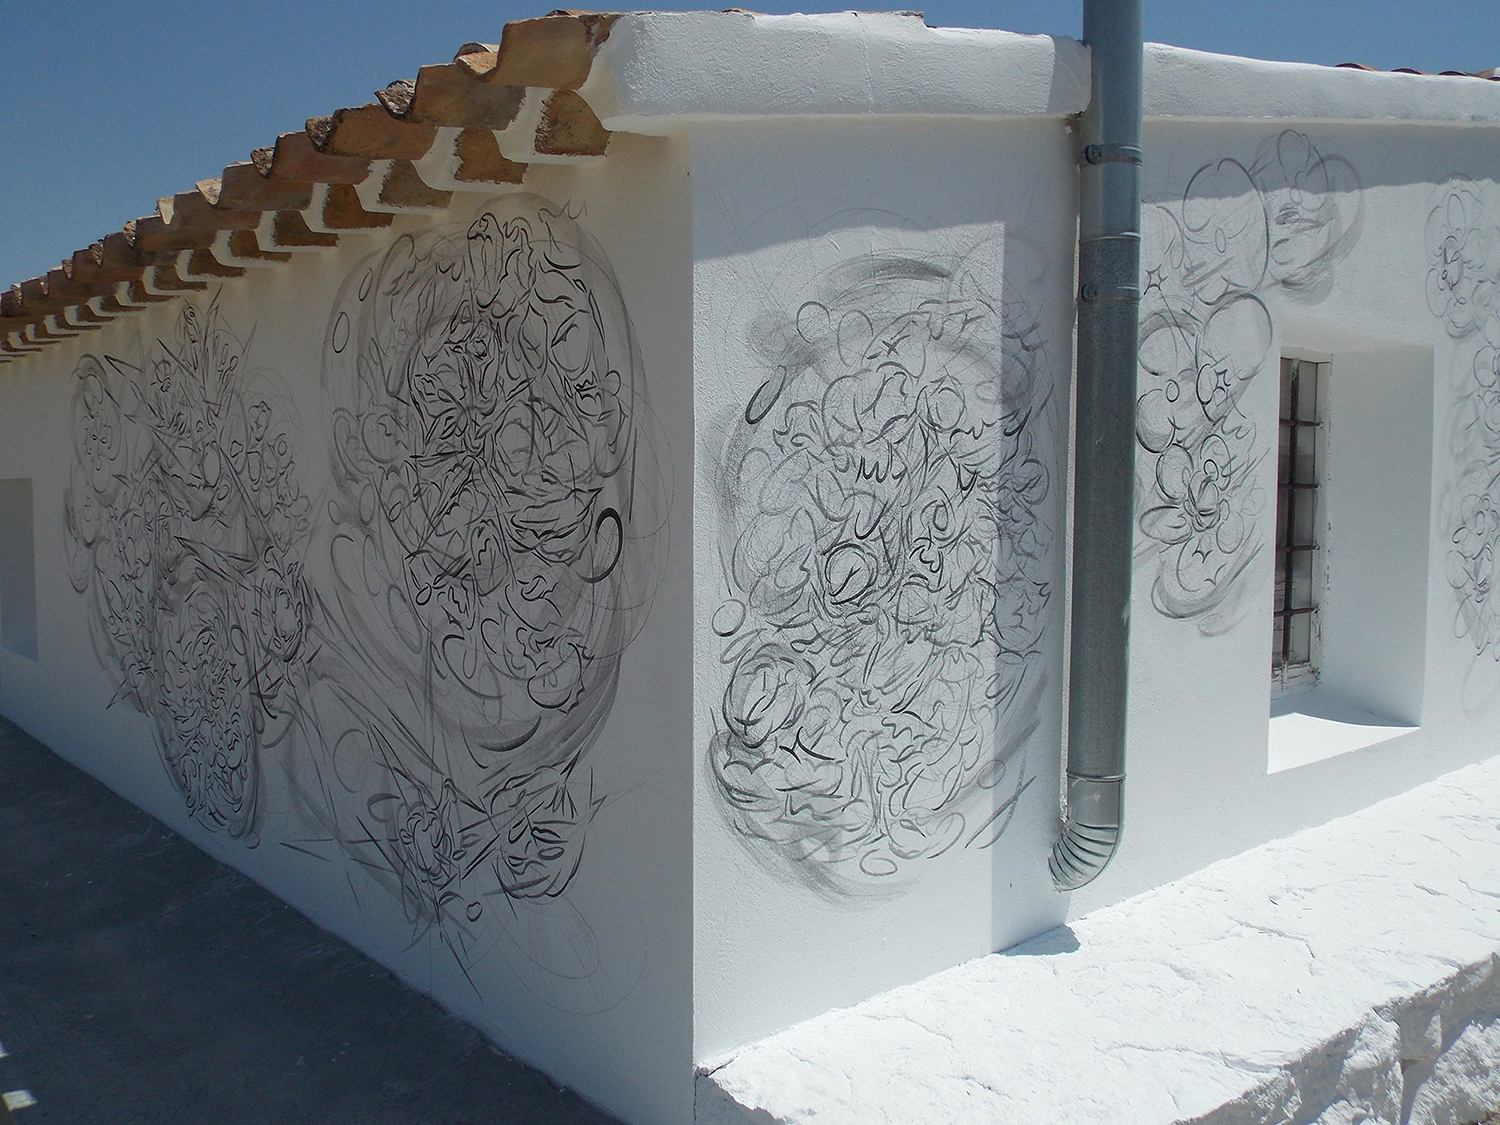    SUNBURST,  2013, acrylic on wall.&nbsp;   Joya: arte + ecología, &nbsp;Cortijada Los Gázquez, Vélez Blanco (Almería), Spain  